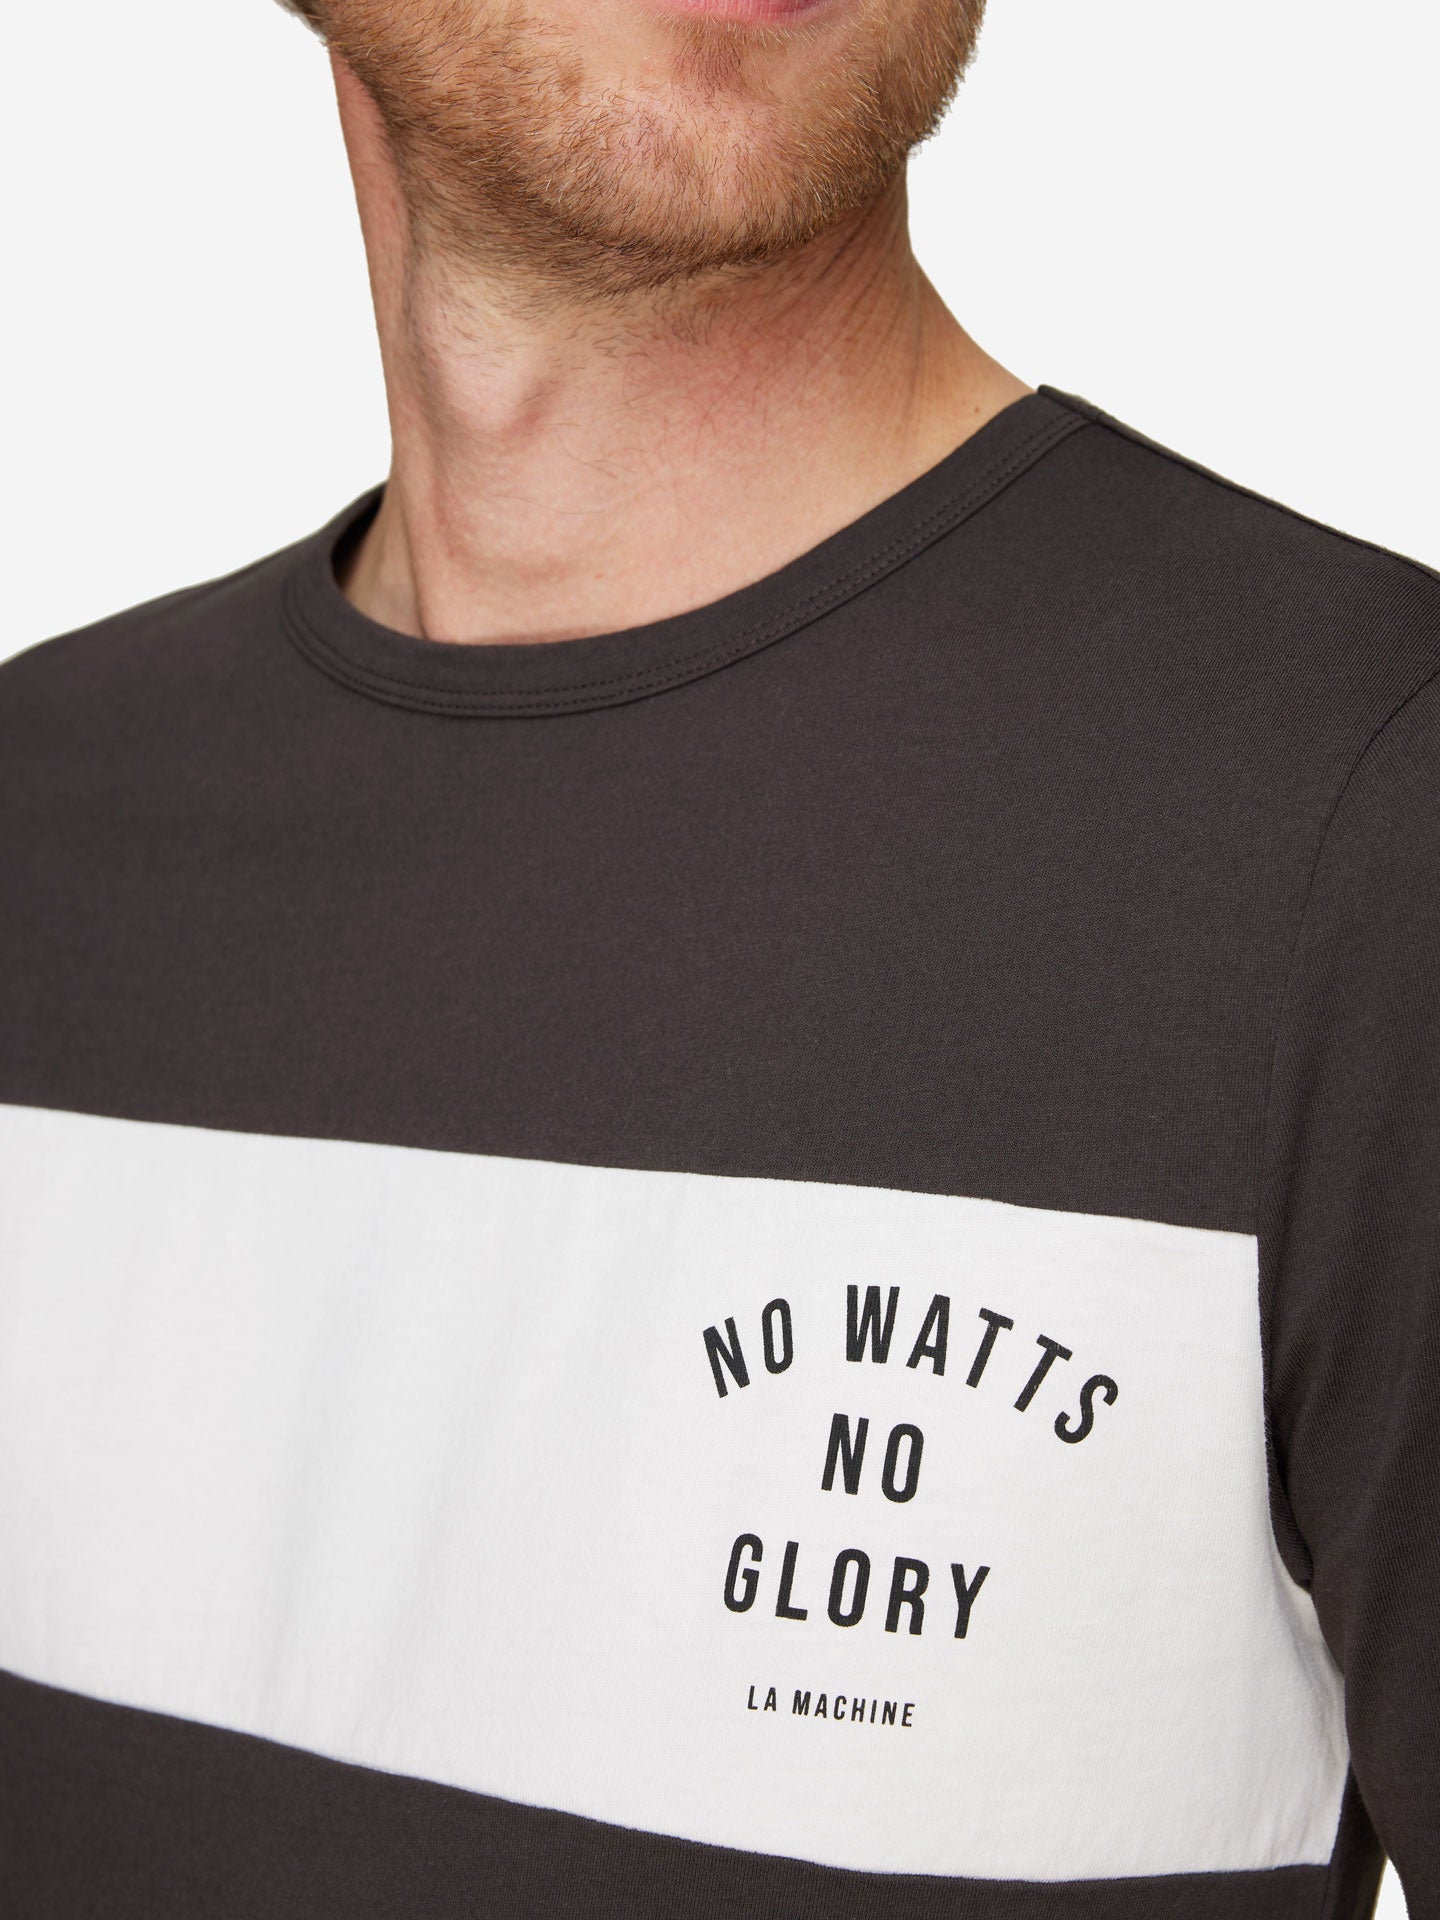 No Watts No Glory - Long Sleeve T-shirt - La Machine Cycle Club